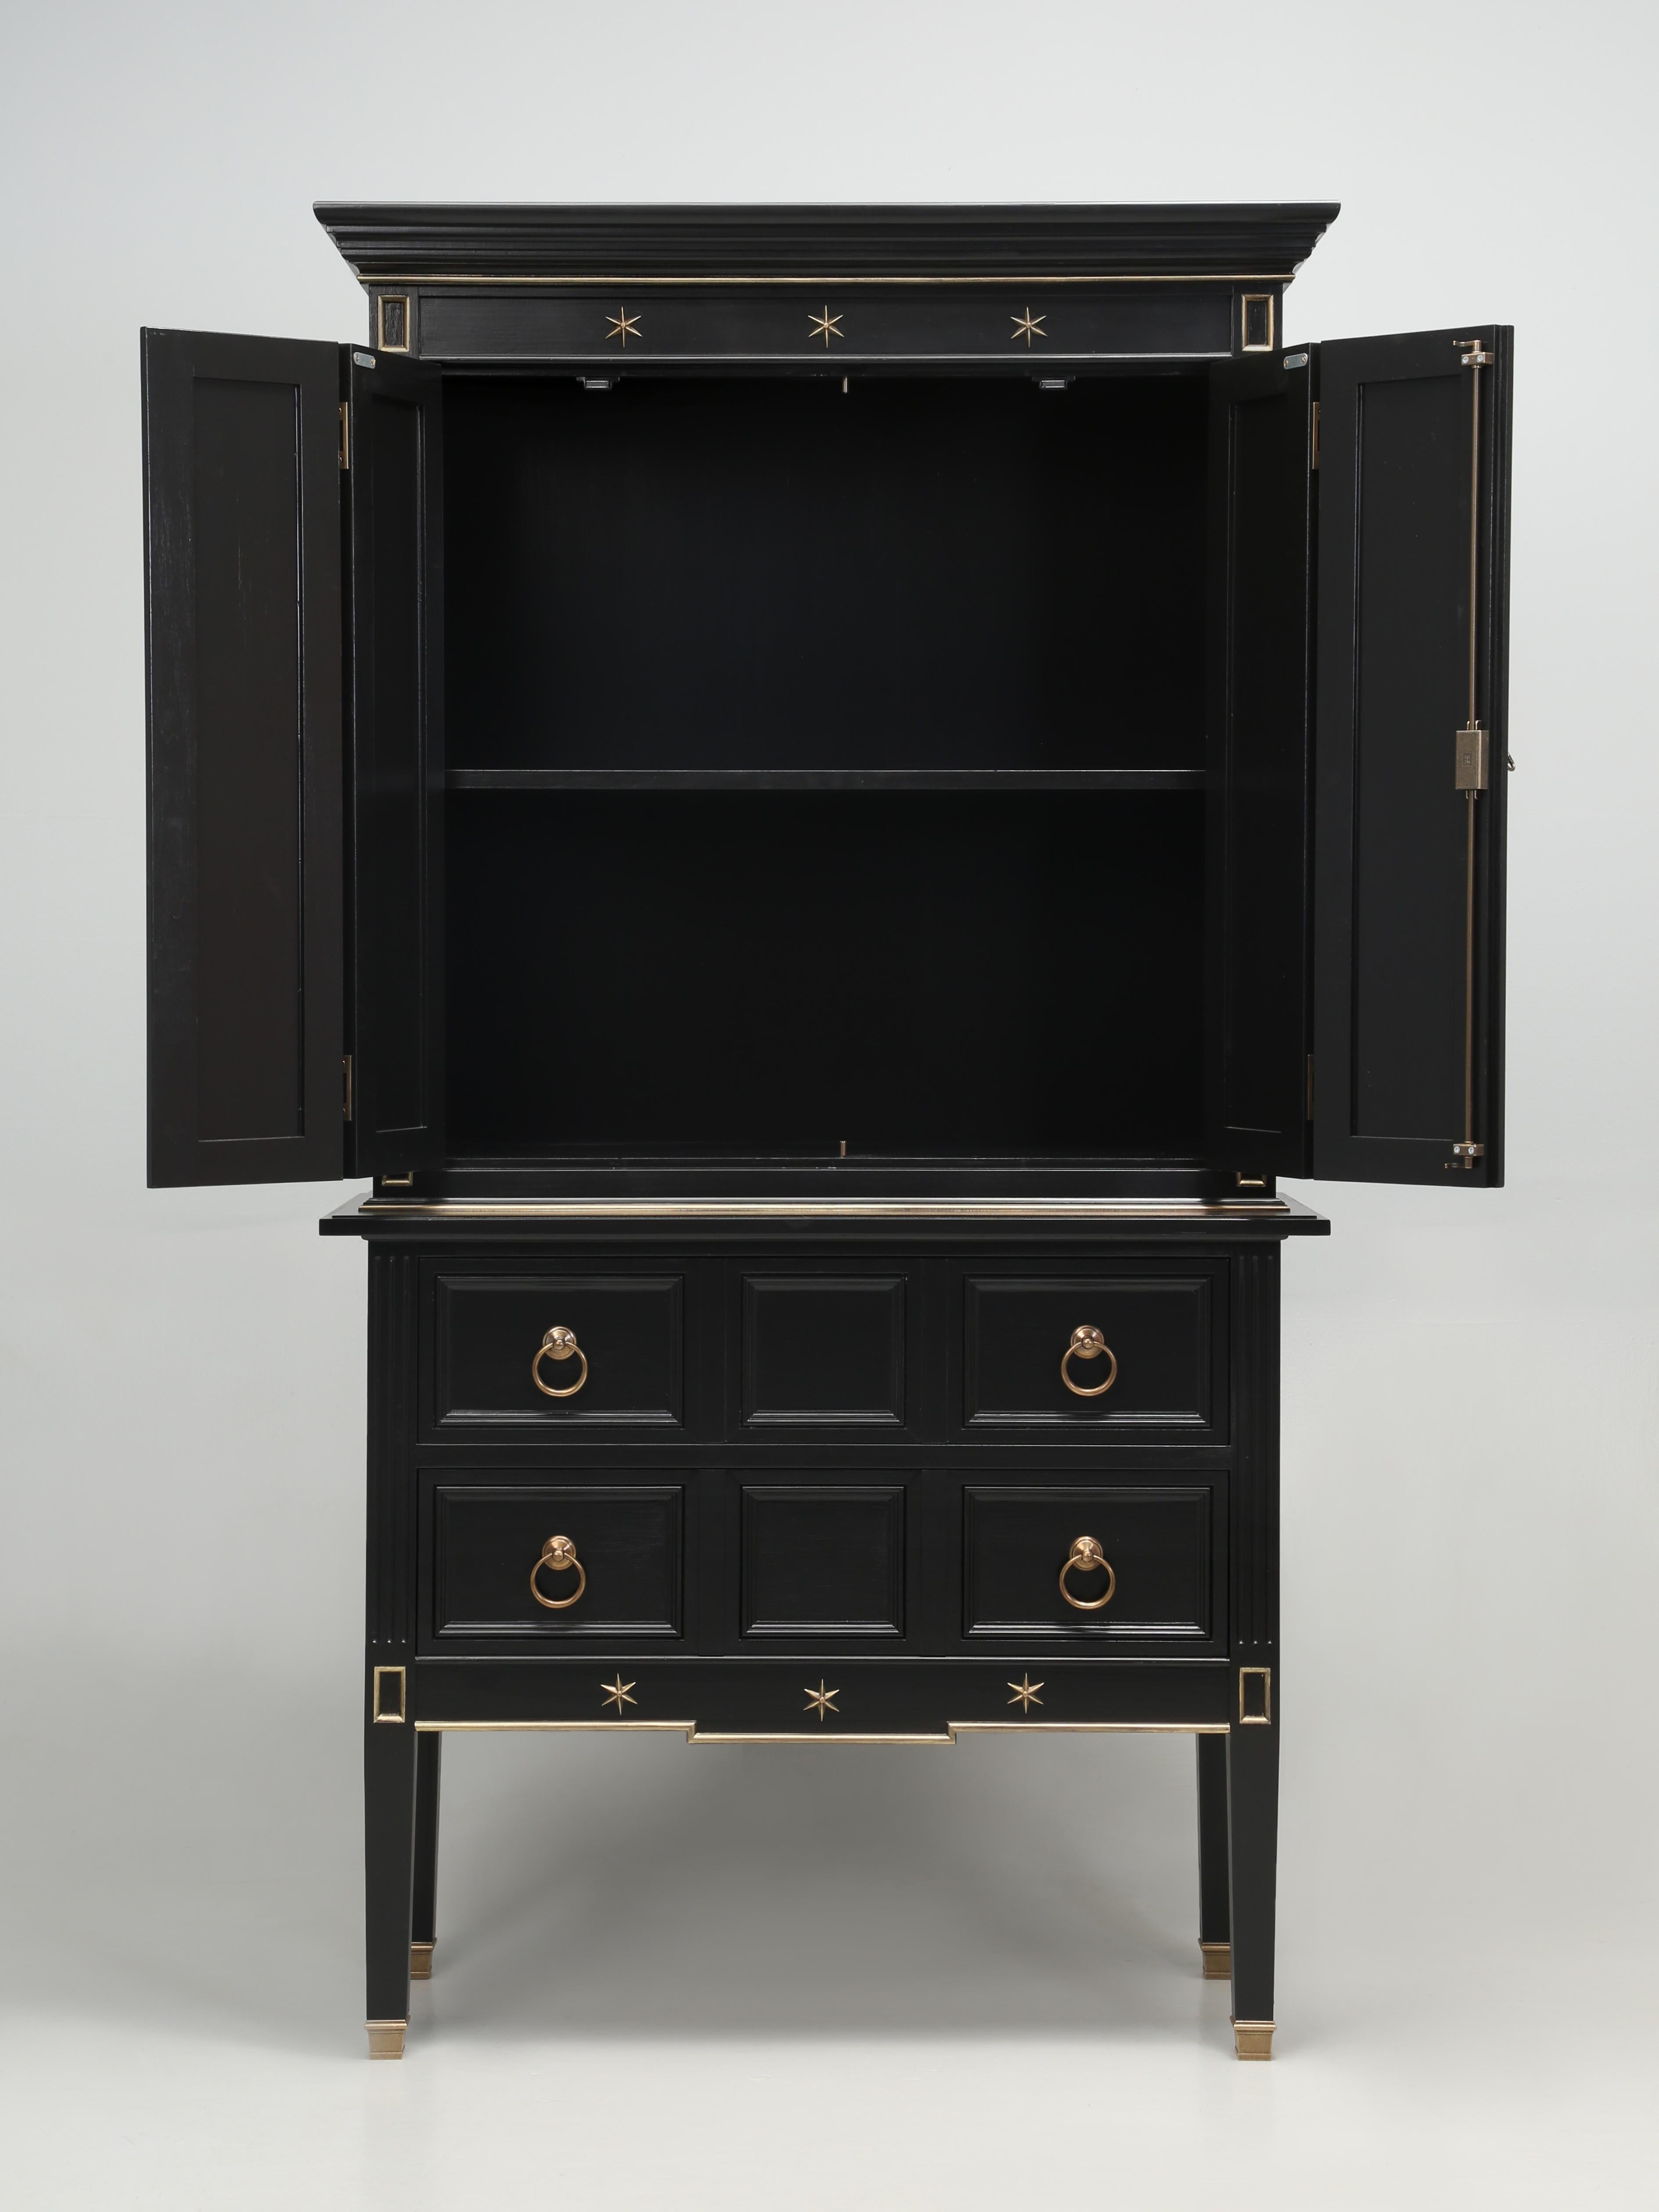 Jacque Adnet Inspired Bespoke Cabinet Bi-Fold Doors Built to Order Any Dimension For Sale 7